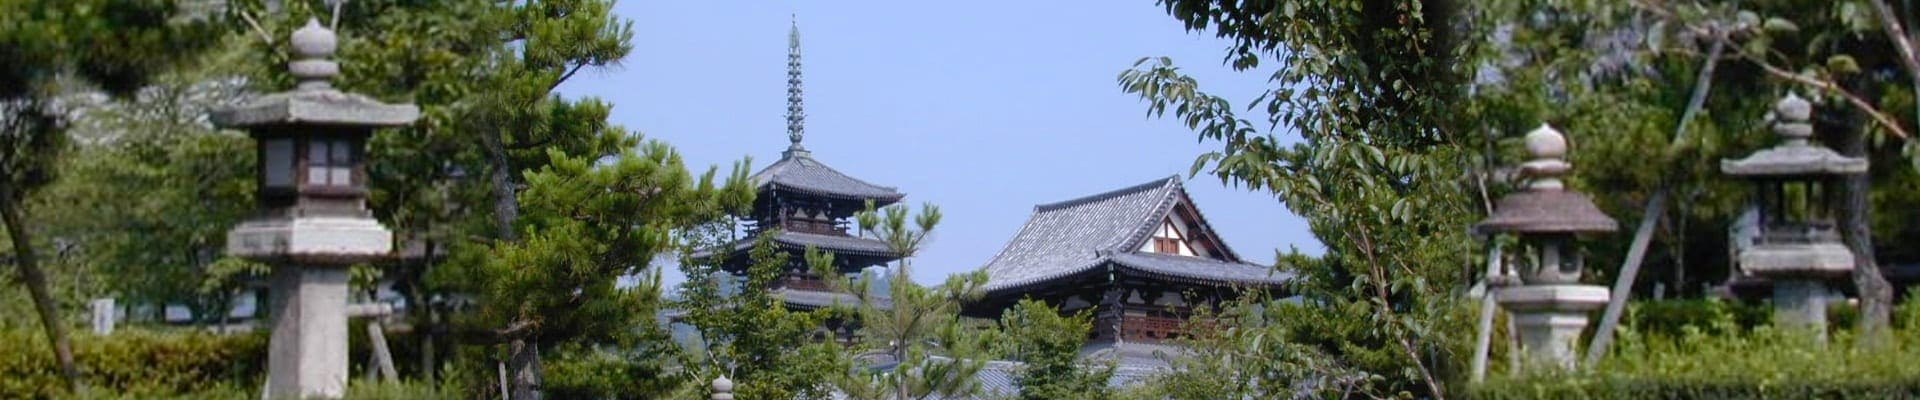 Horyuji Temple, Nara, Japan, completed 607 CE